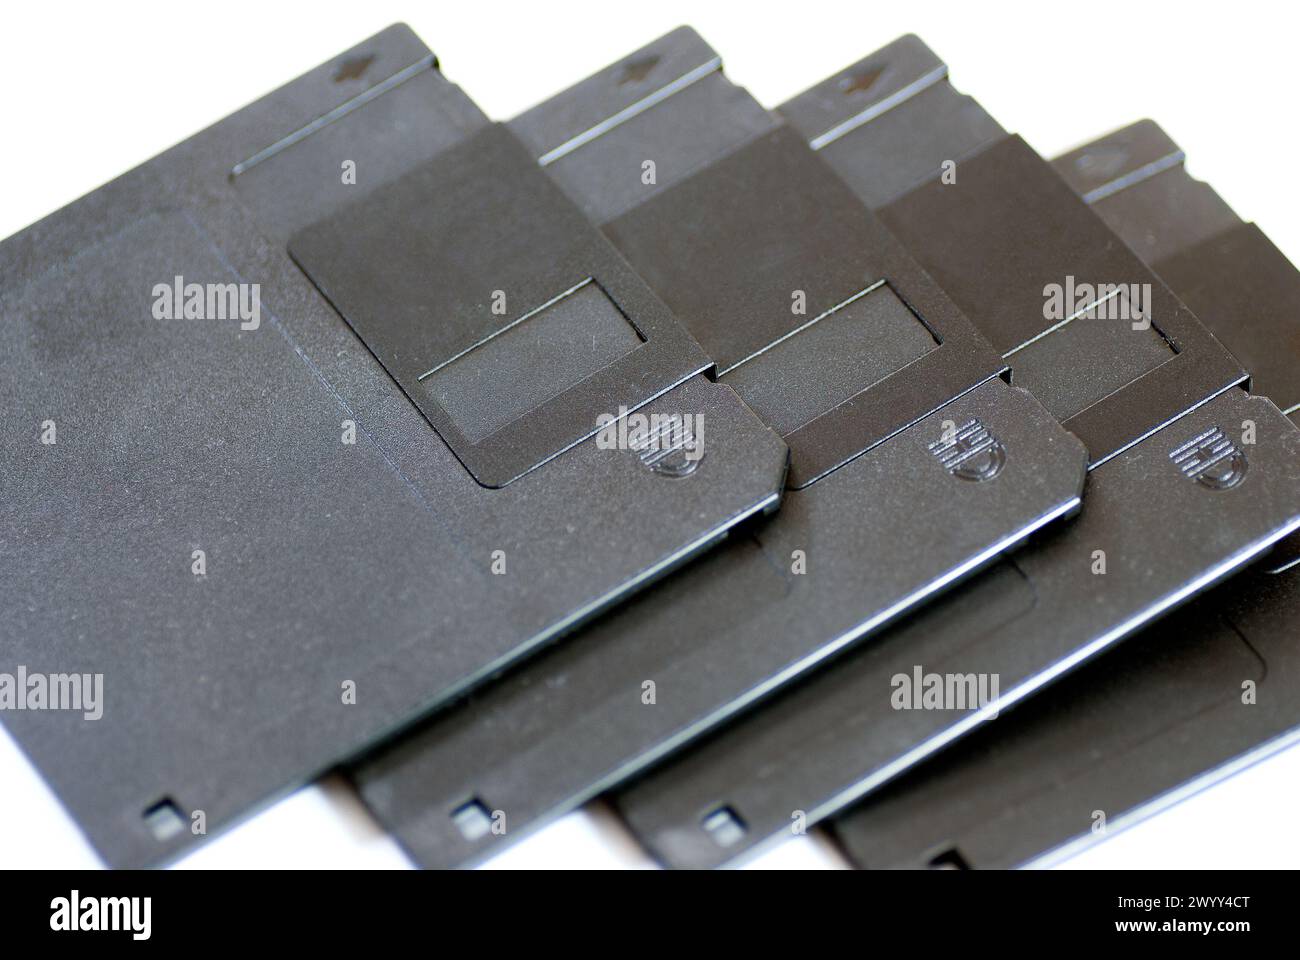 obsolete 3.5 inch floppy disk aligned Stock Photo